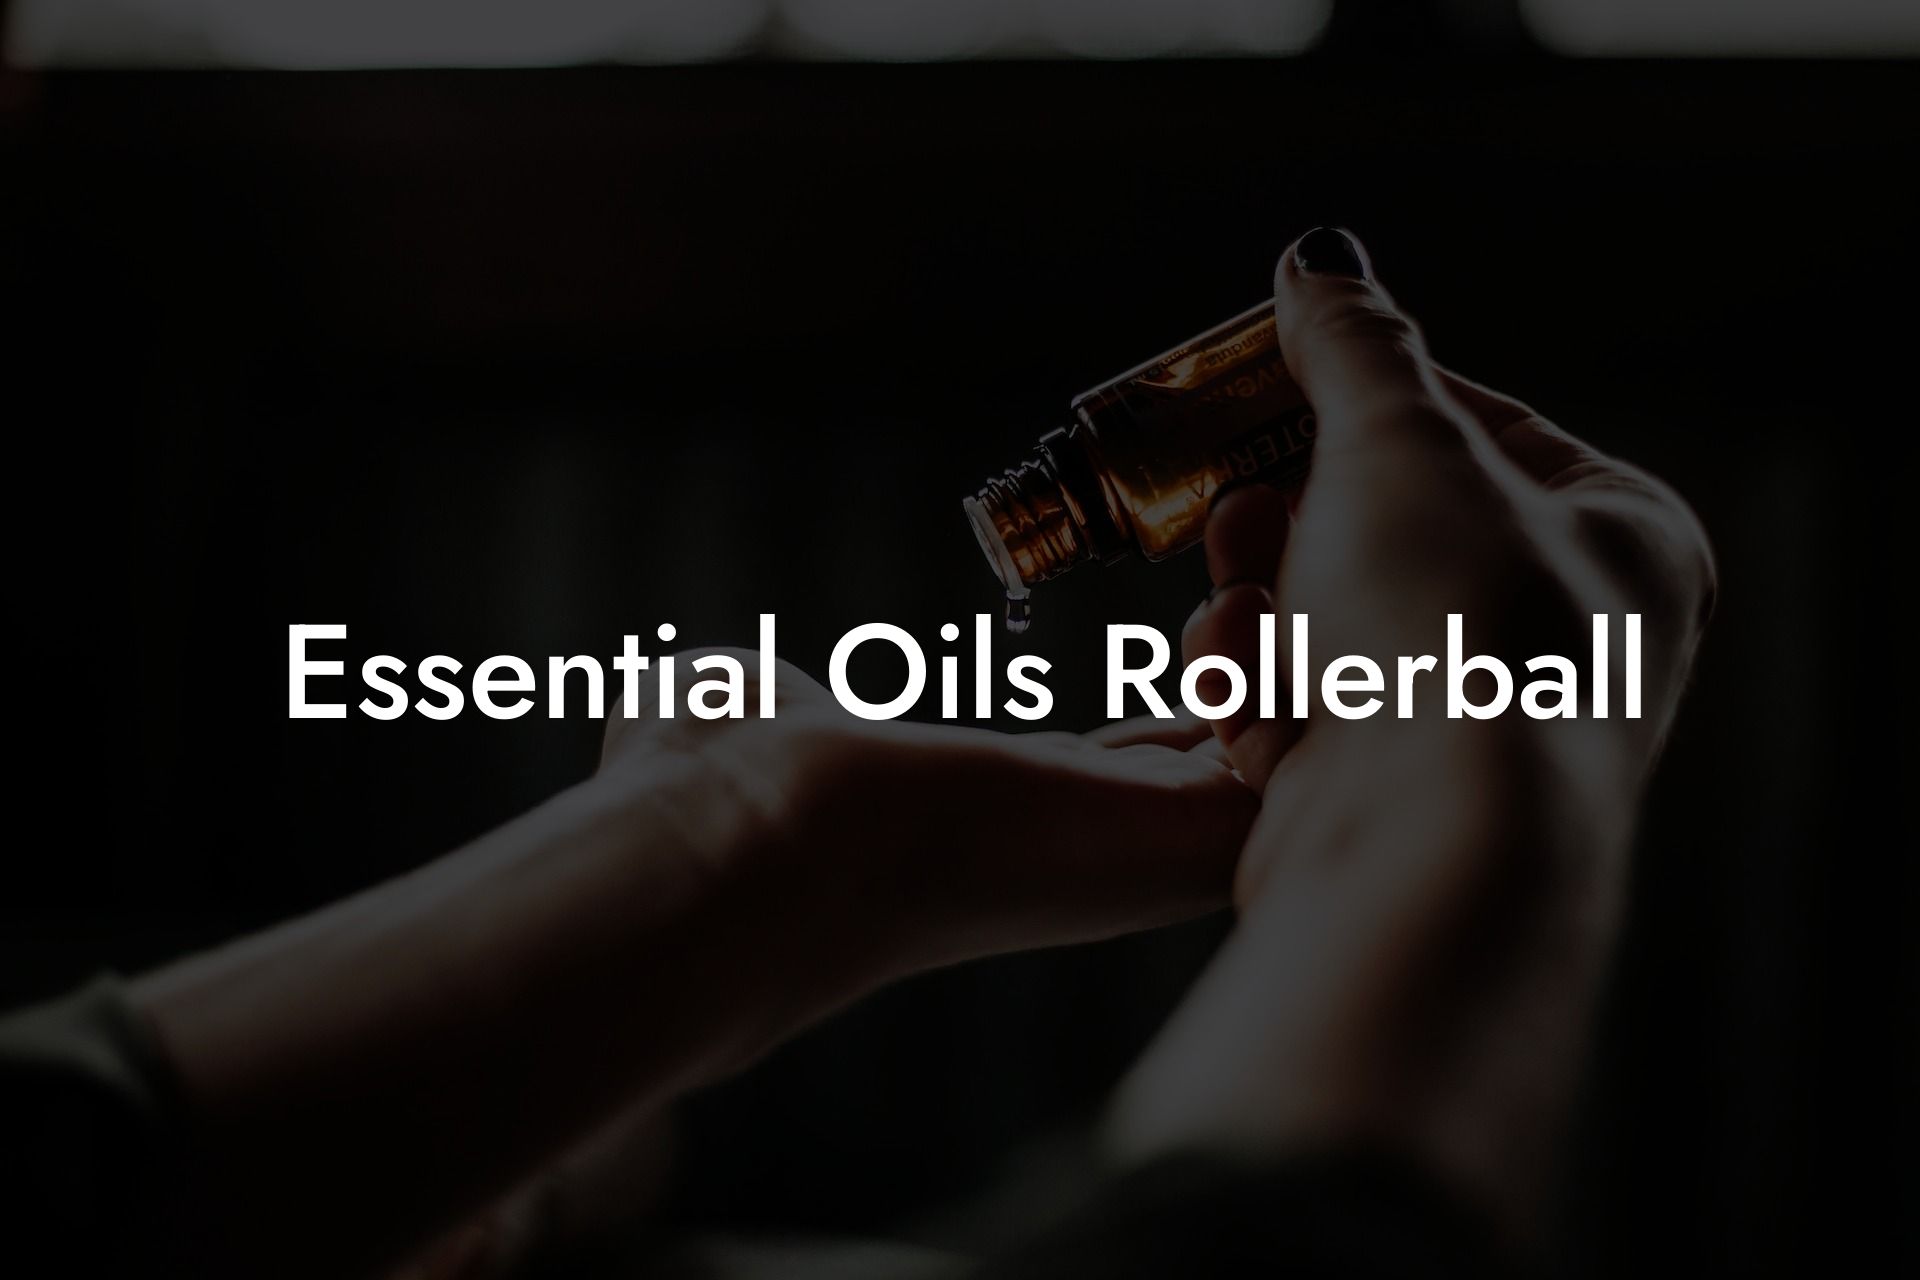 Essential Oils Rollerball